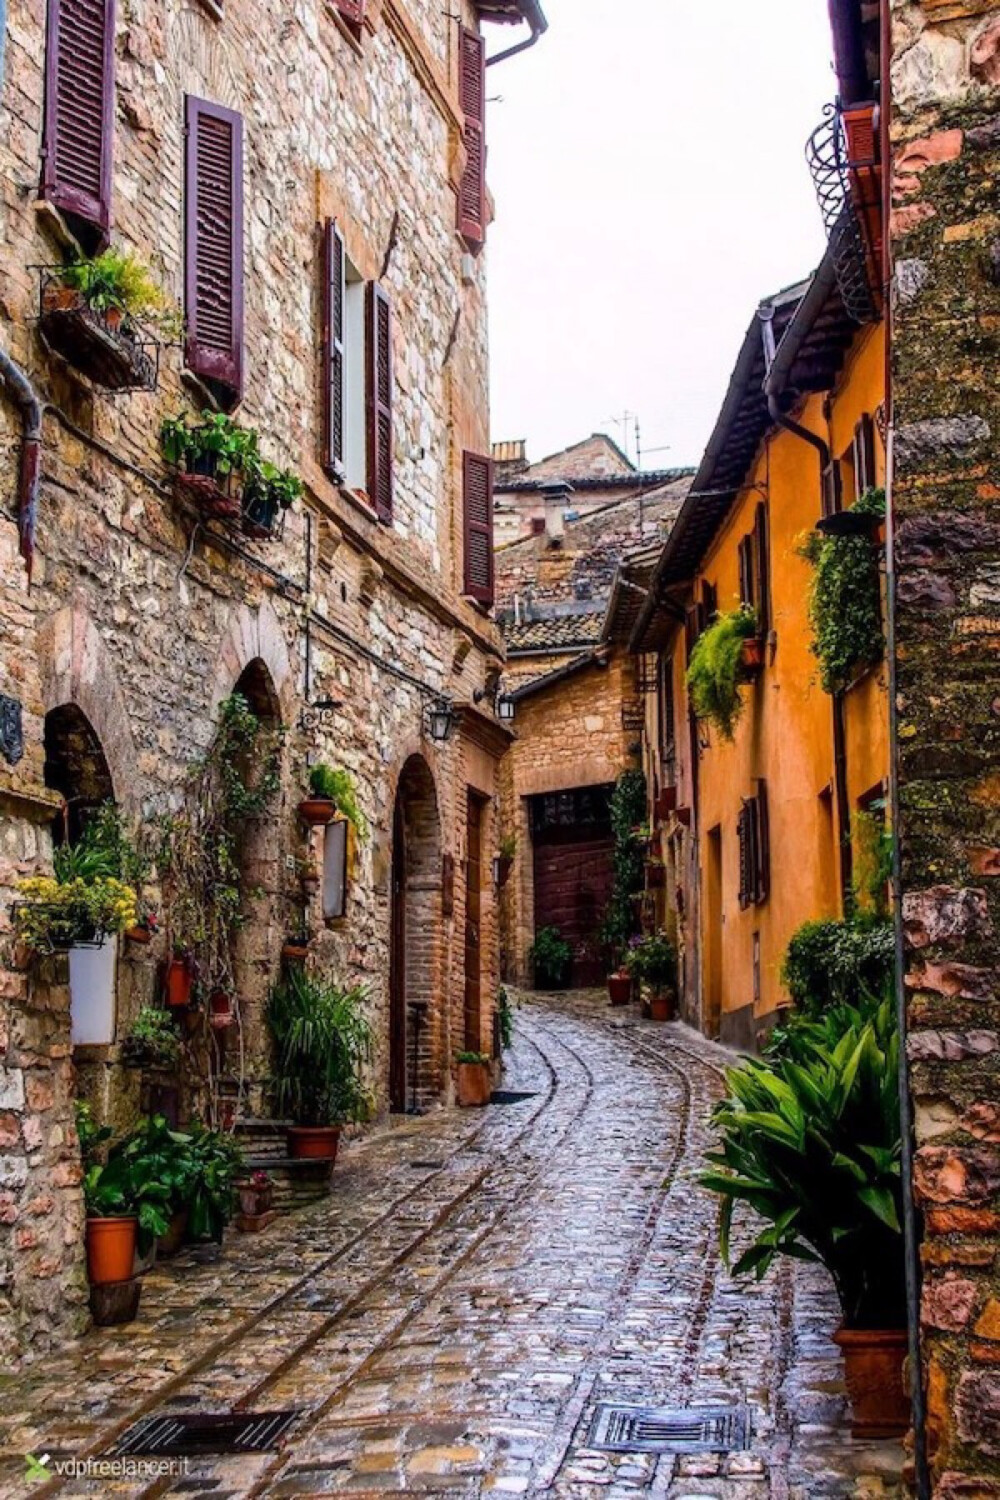 Spello, Umbria, Italy。意大利翁布里亚斯佩罗。有着田园诗般的乡村和山野，风景如画的翁布里亚被誉为“意大利的绿色心脏”。而斯佩罗本是非常素朴的中世纪小城，和翁布里亚其他城市差不多，石头是绝对的主角。斯佩罗建筑的百分之八十都是罗马时代遗迹，也就是说，斯佩罗是翁布里亚最古罗马的小镇。斯佩罗的鲜花节，意大利语是Infiorata，其实是翁布里亚小镇斯皮罗的圣体瞻礼仪式，这一天，斯皮罗的所有主要街道和广场上，都铺满干花屑组成的花毯，美轮美奂。这里的人格外喜爱鲜花，即使不是鲜花节，所有窗台阳台也都花团锦簇，方显清凉和艳丽